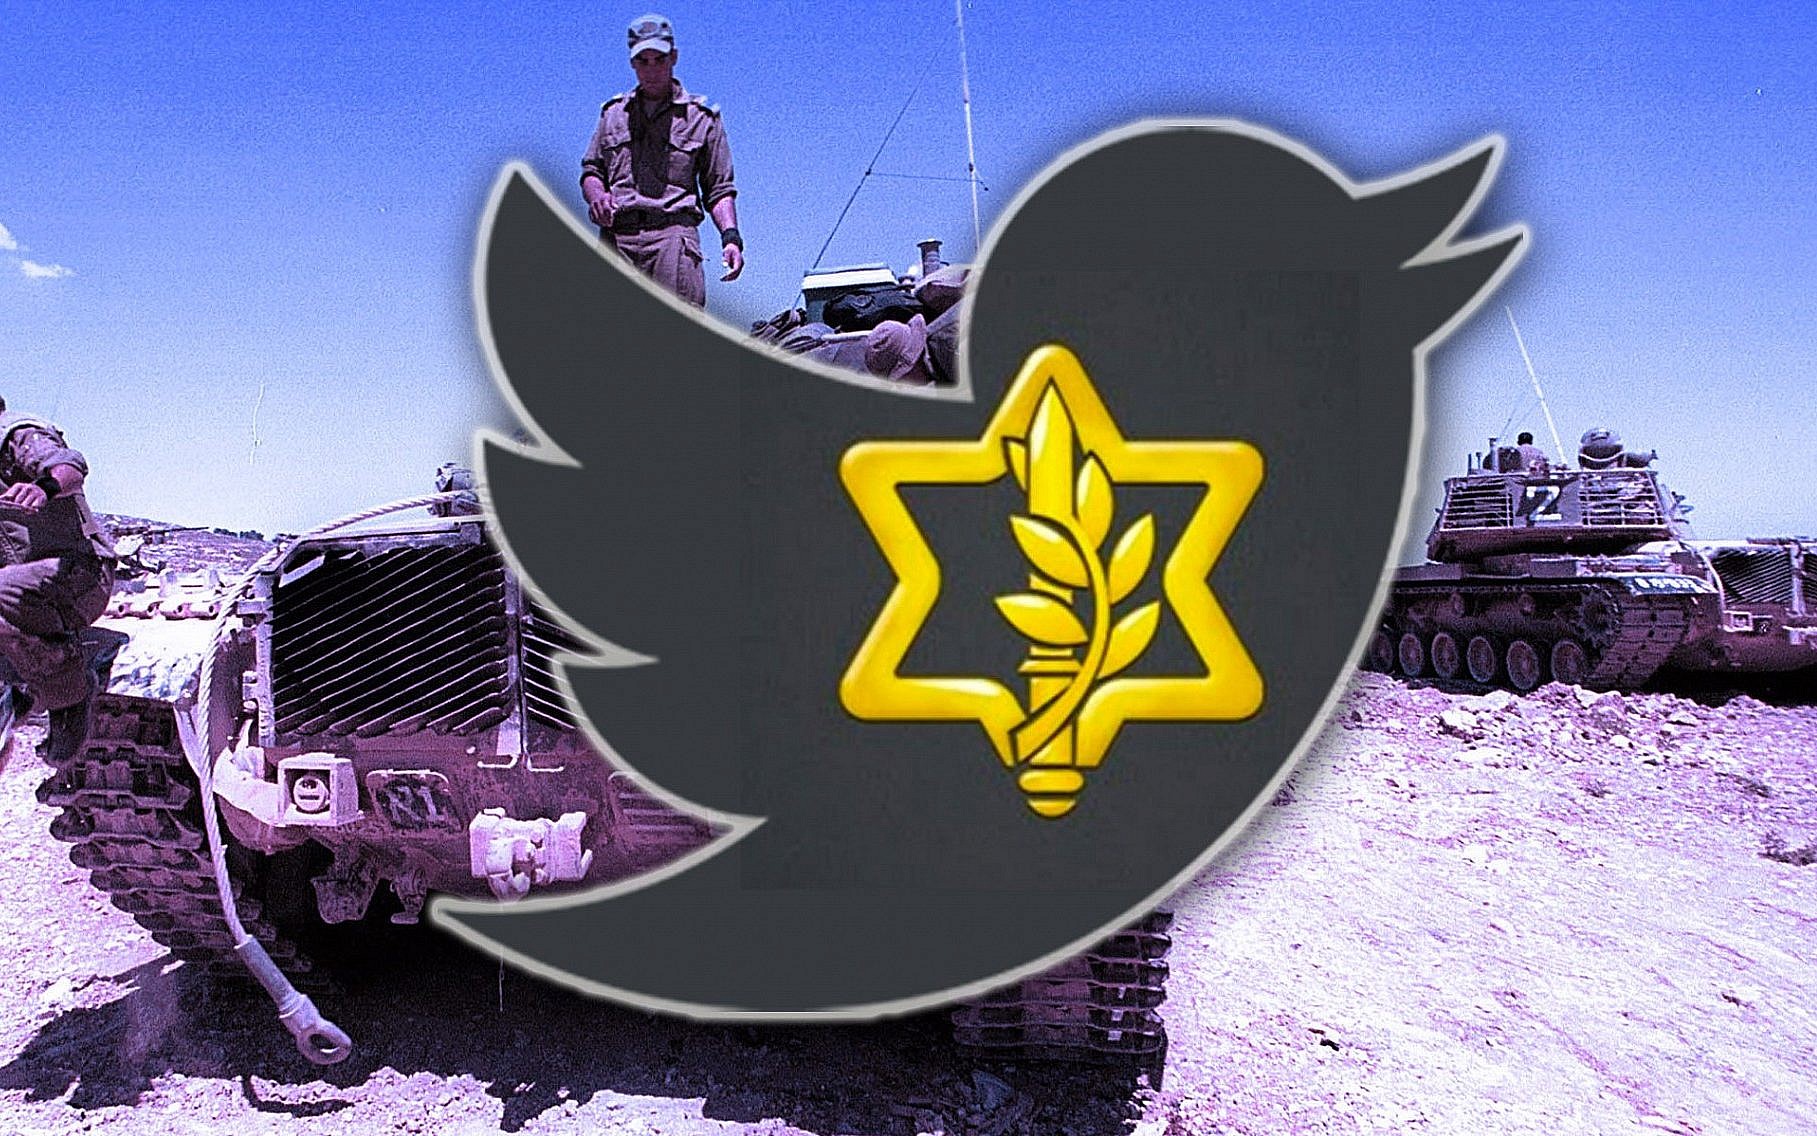 Israel defense forces twitter